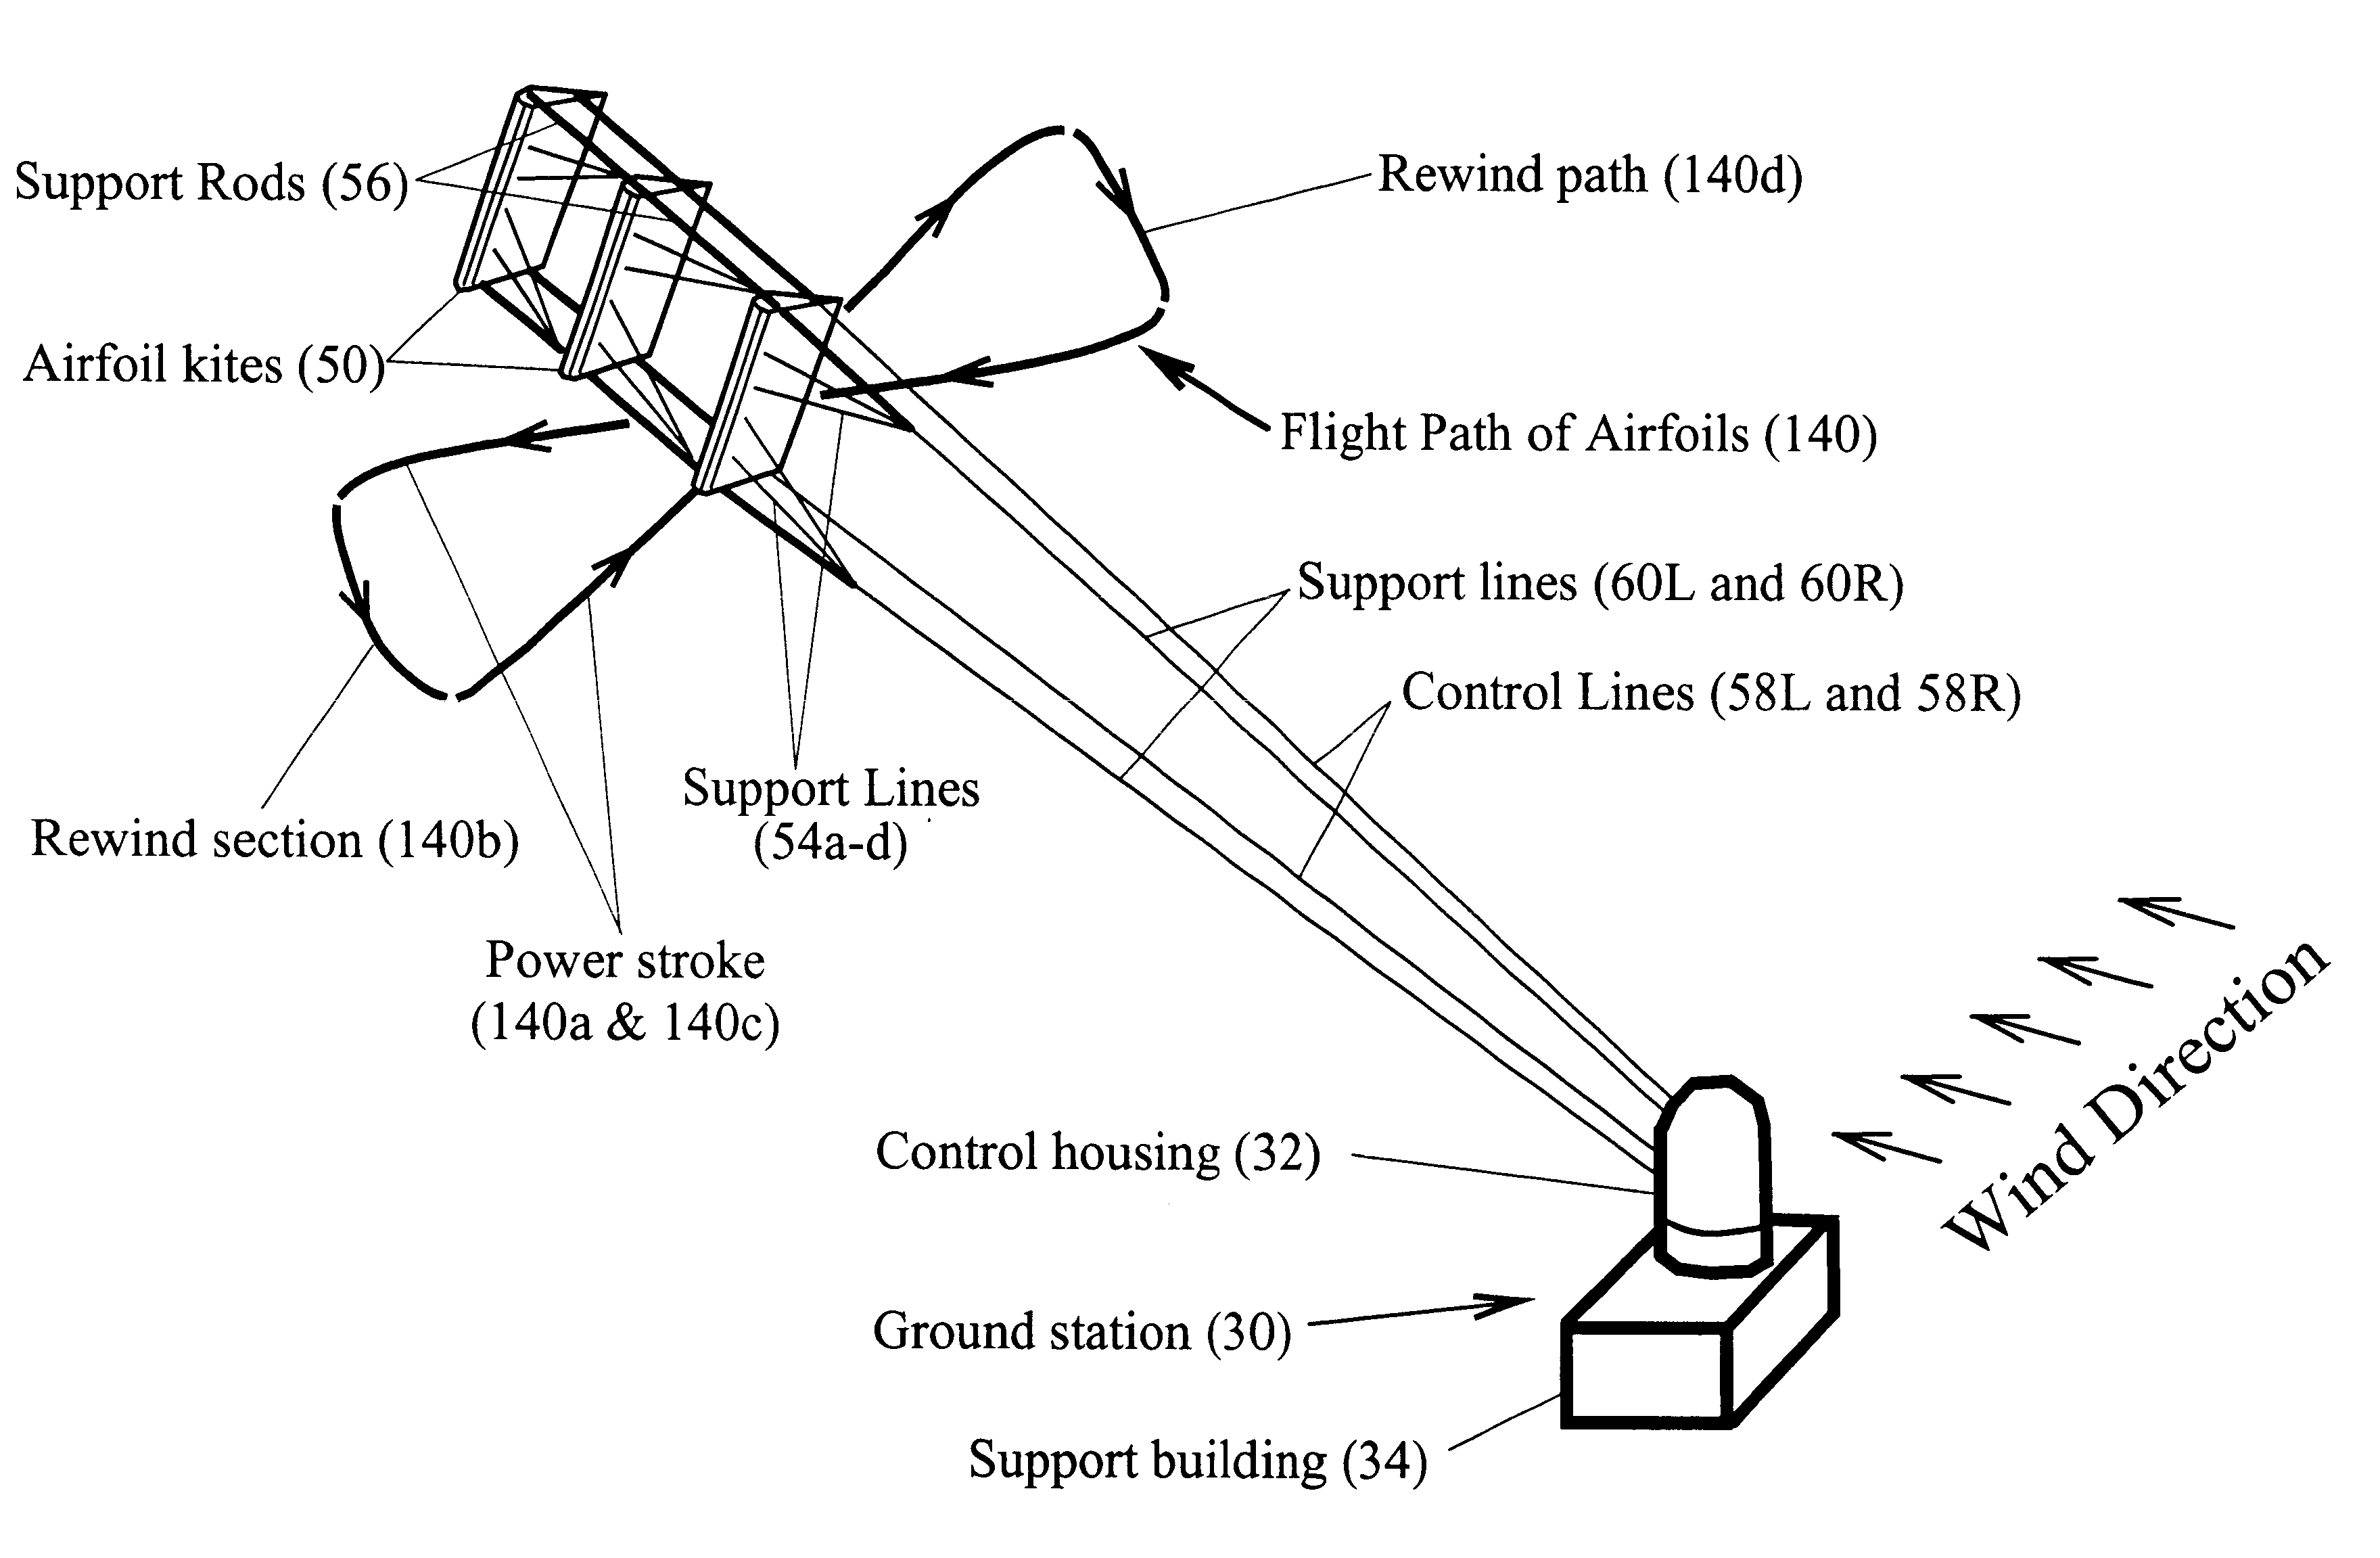 Axial-mode linear wind-turbine